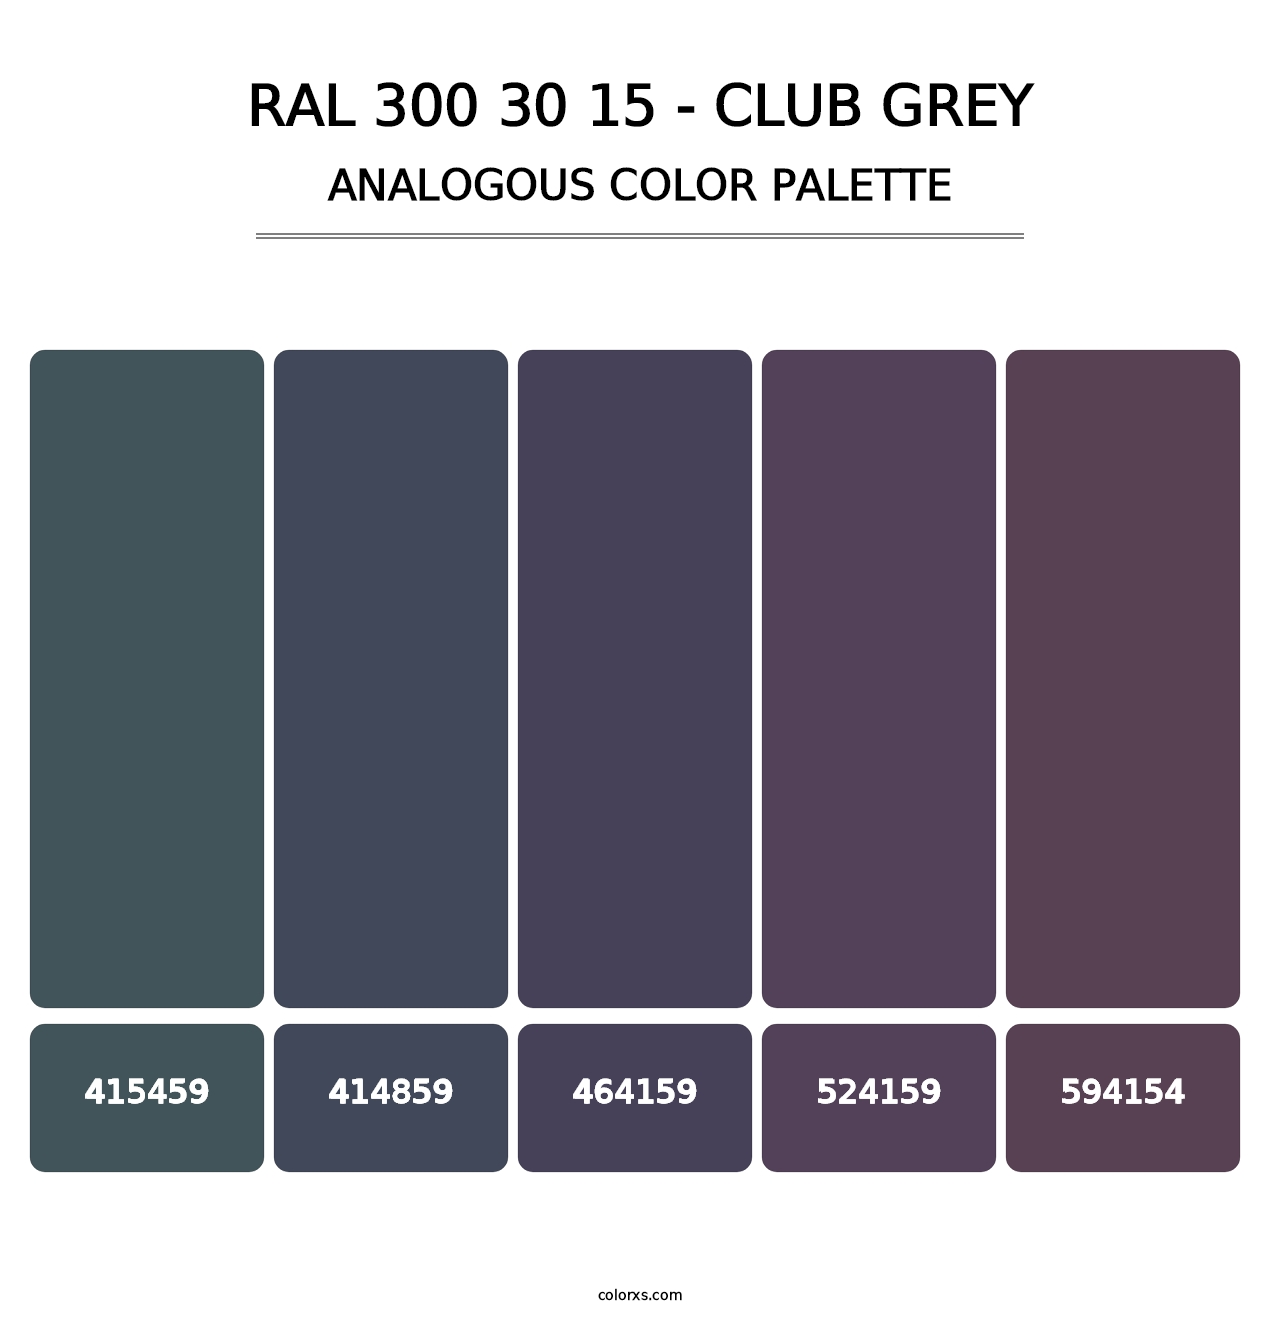 RAL 300 30 15 - Club Grey - Analogous Color Palette